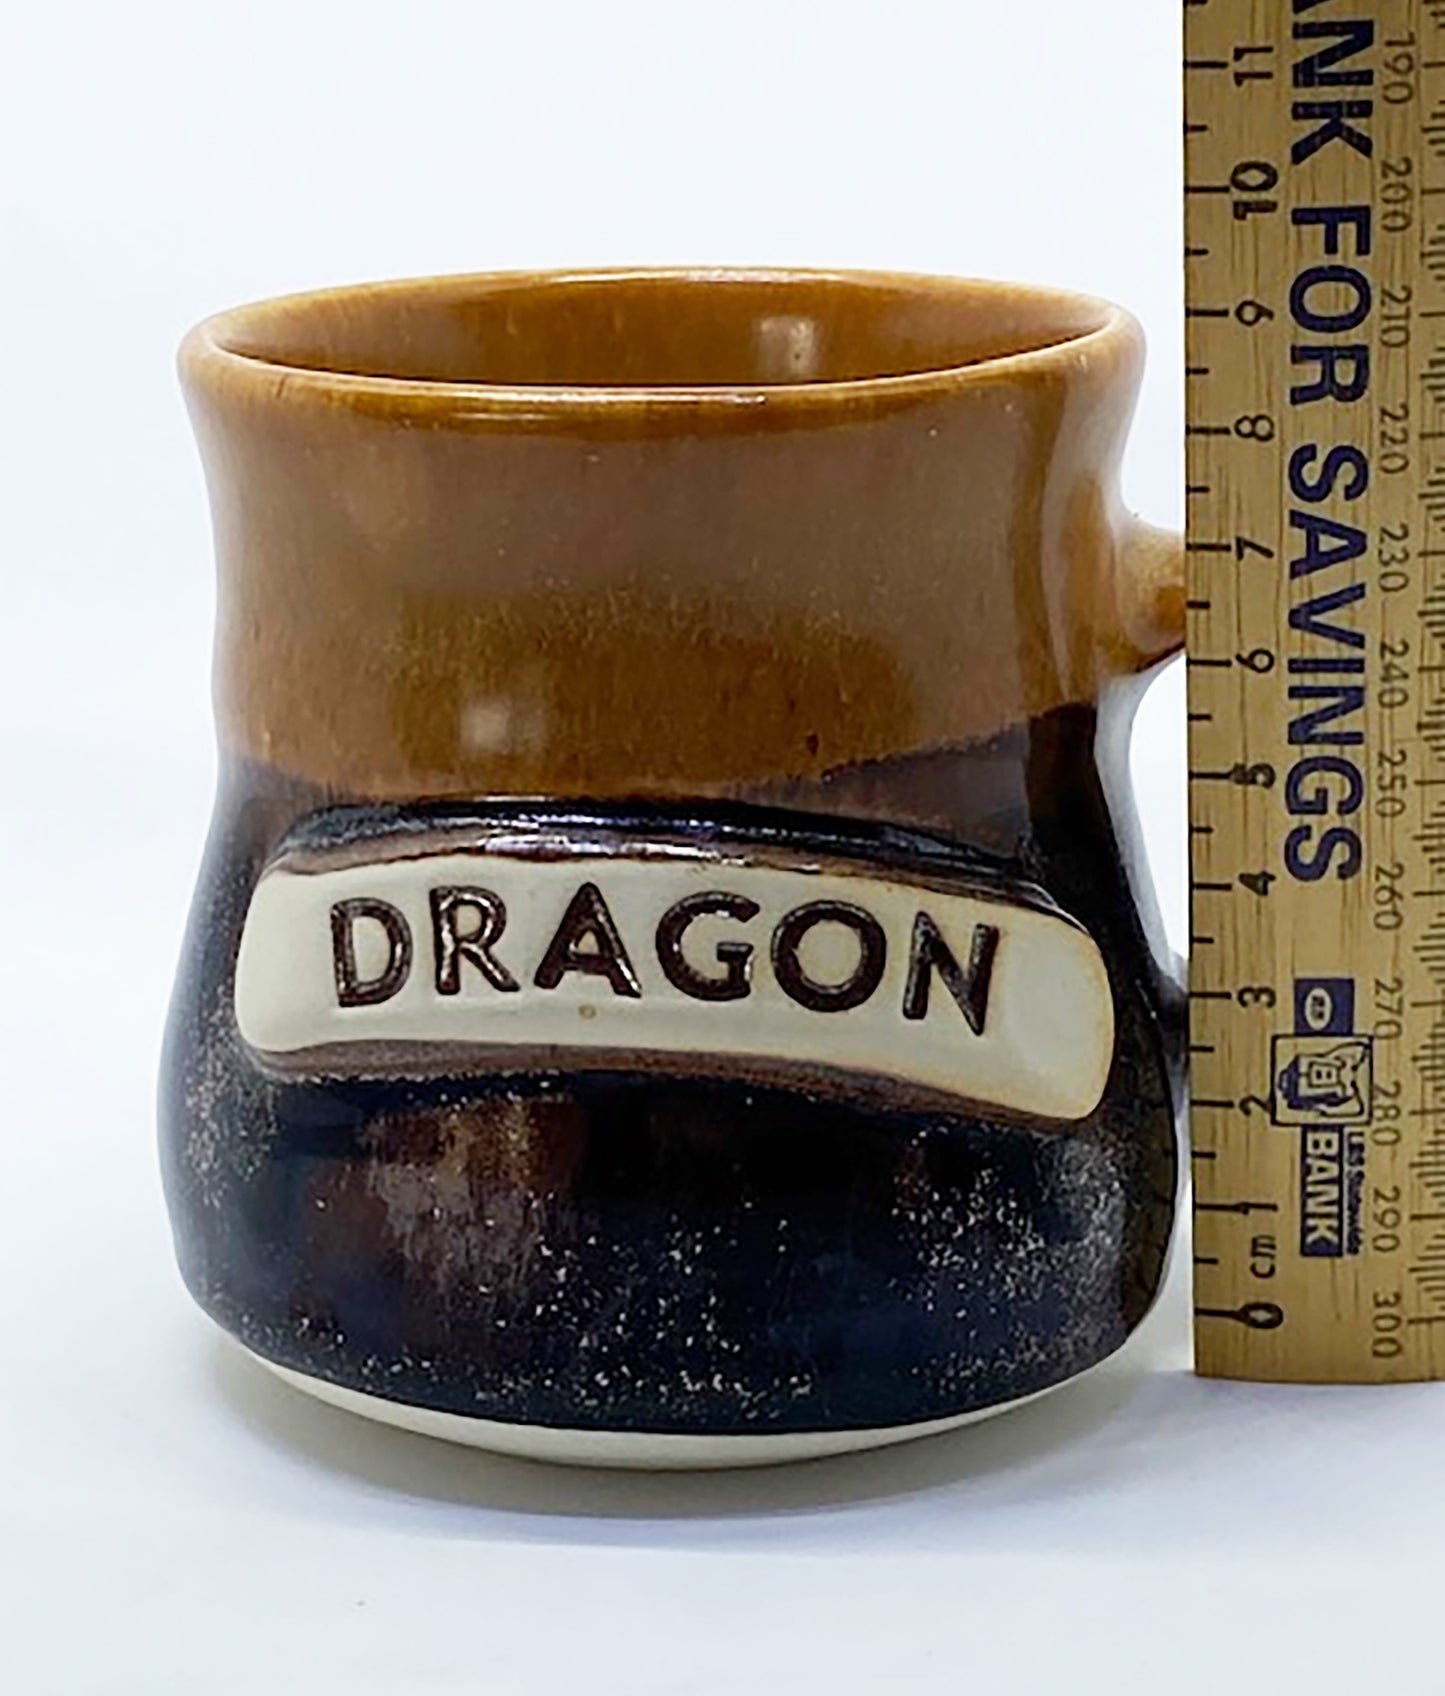 Bagdad Pottery Tasmania 'Dragon' mug